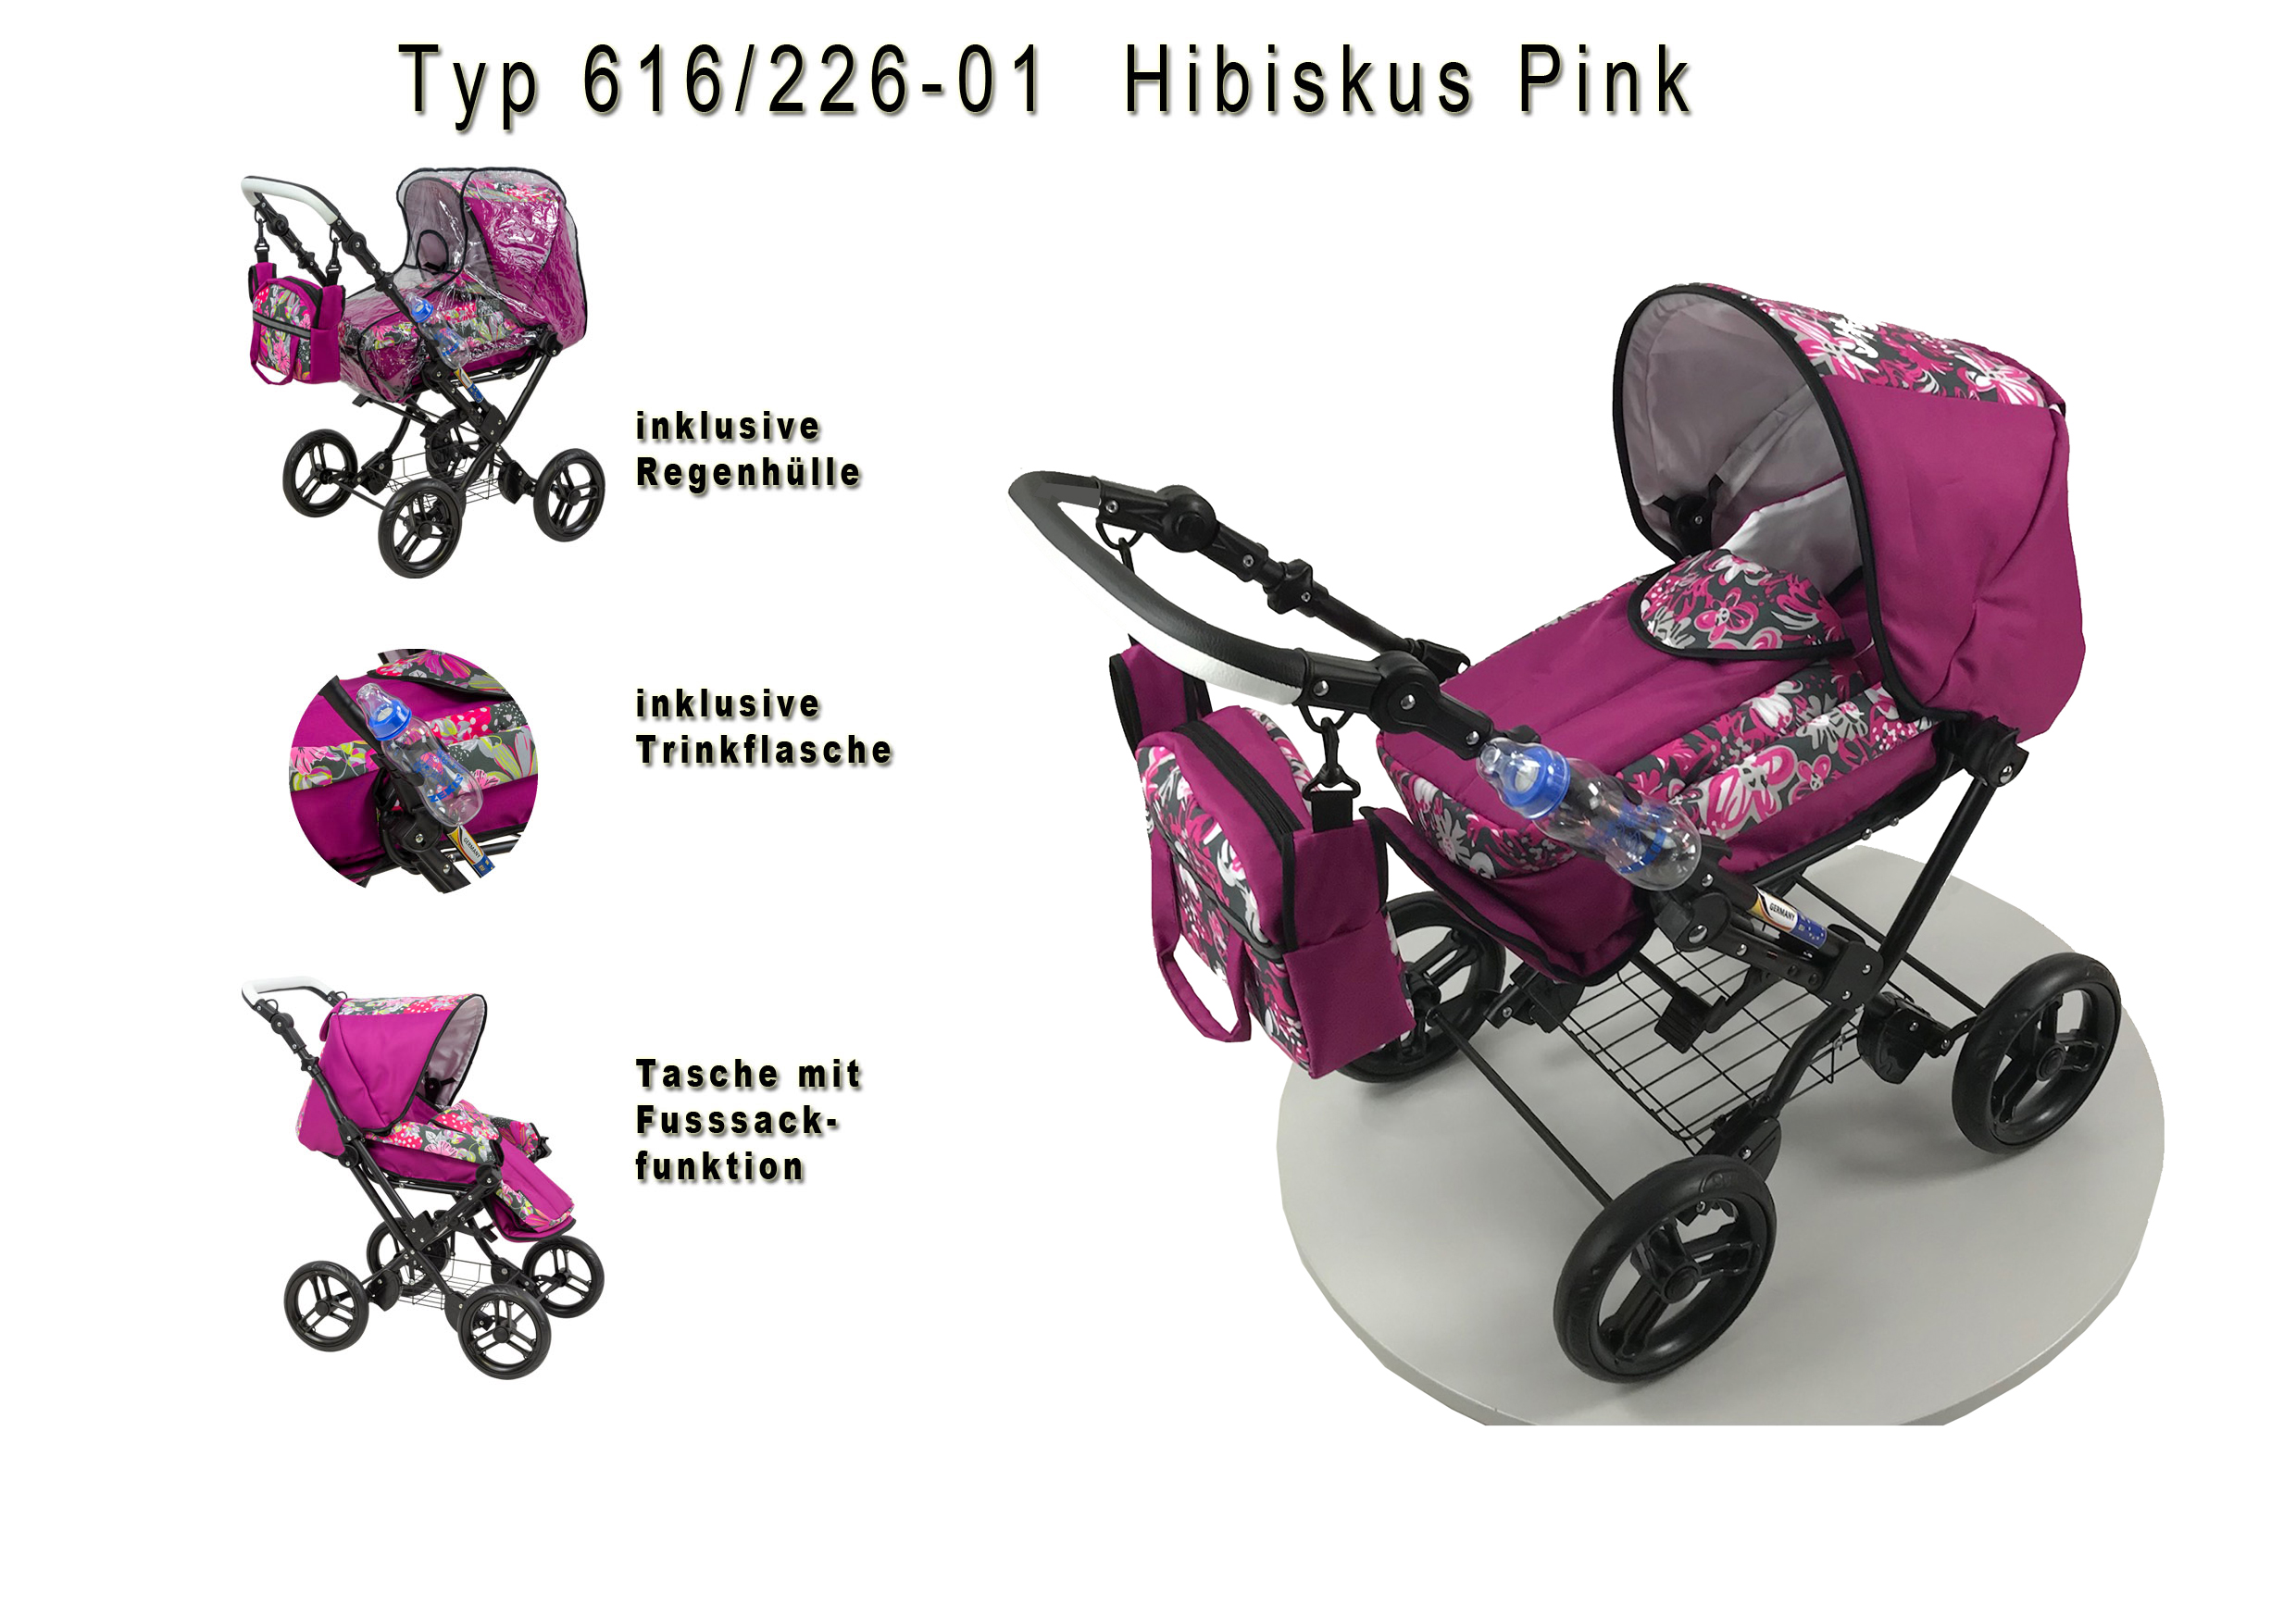 ZEKIWA Zeki Complete Hibiskus Pink